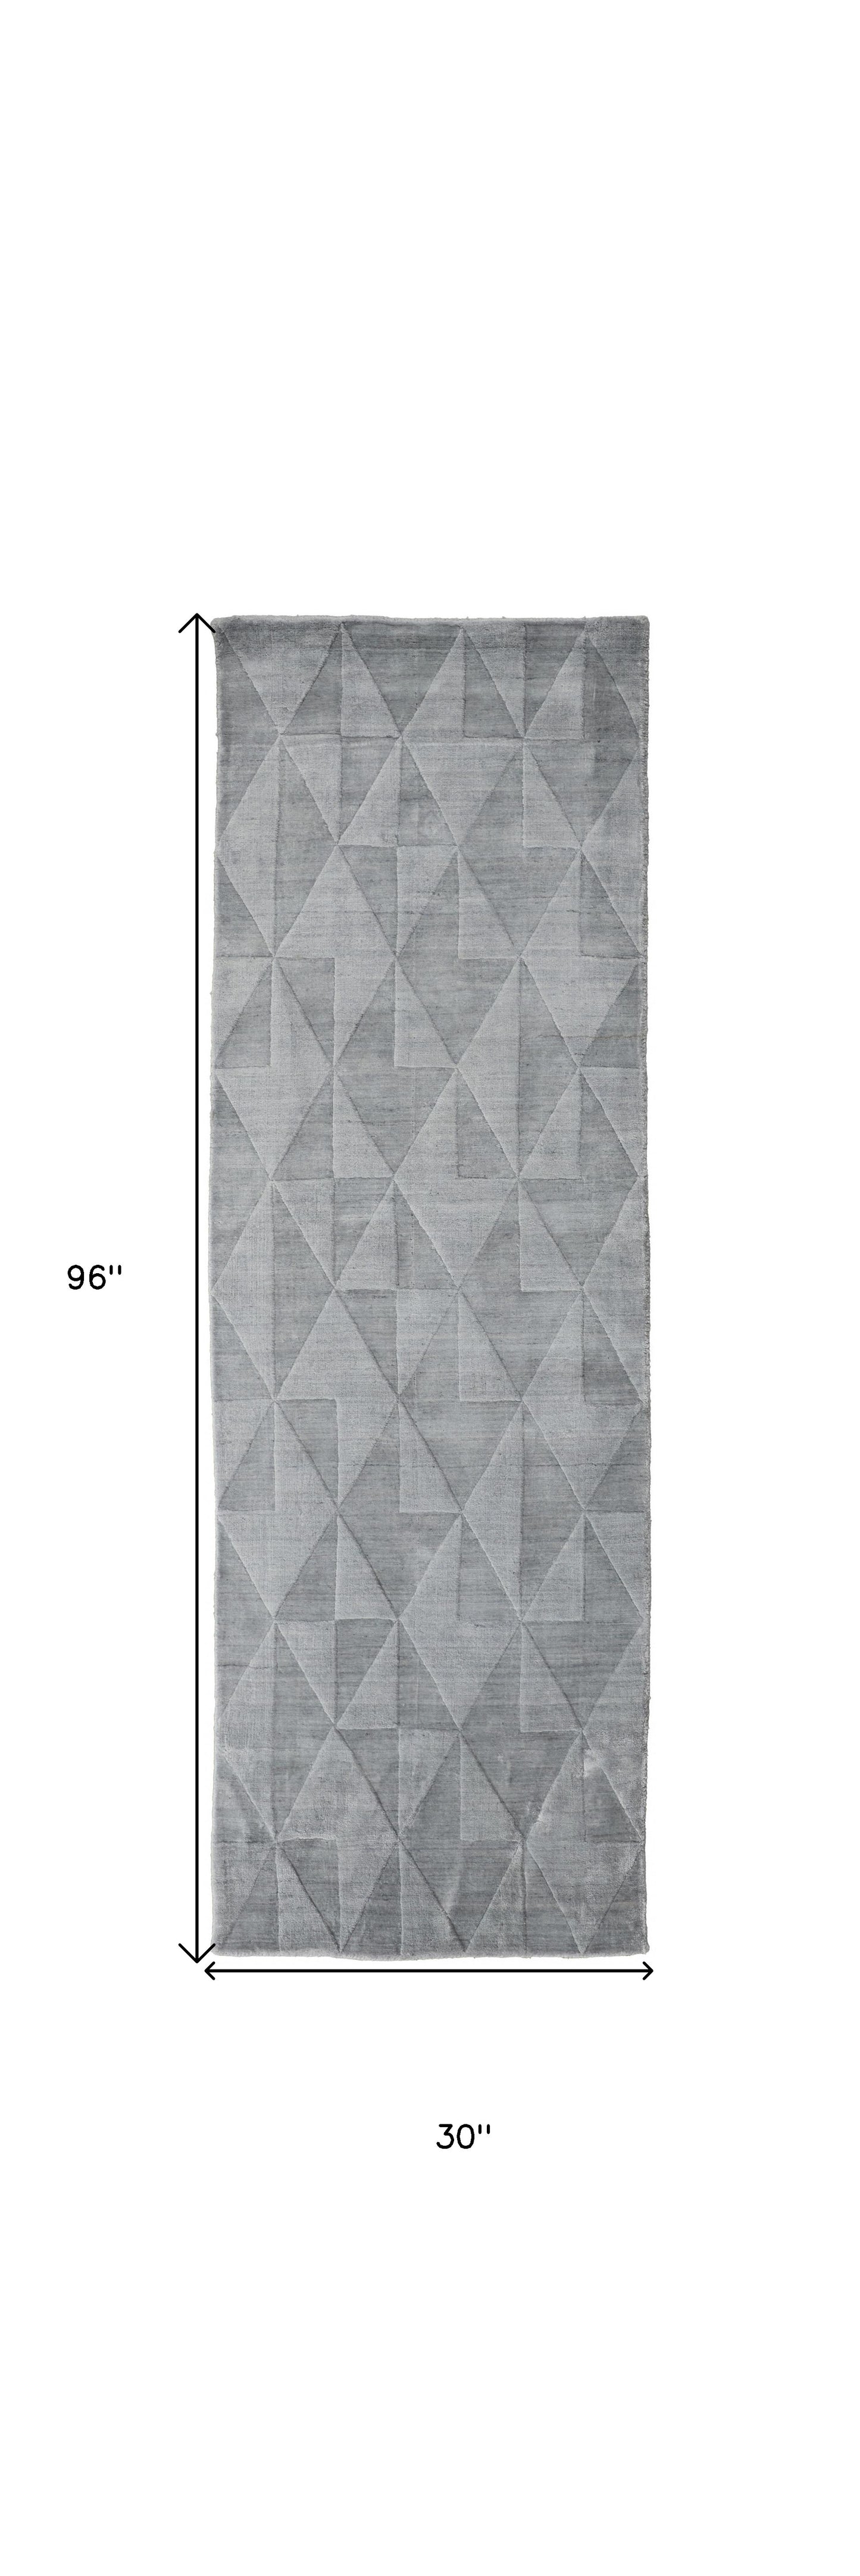 4' X 6' Taupe Geometric Hand Woven Area Rug